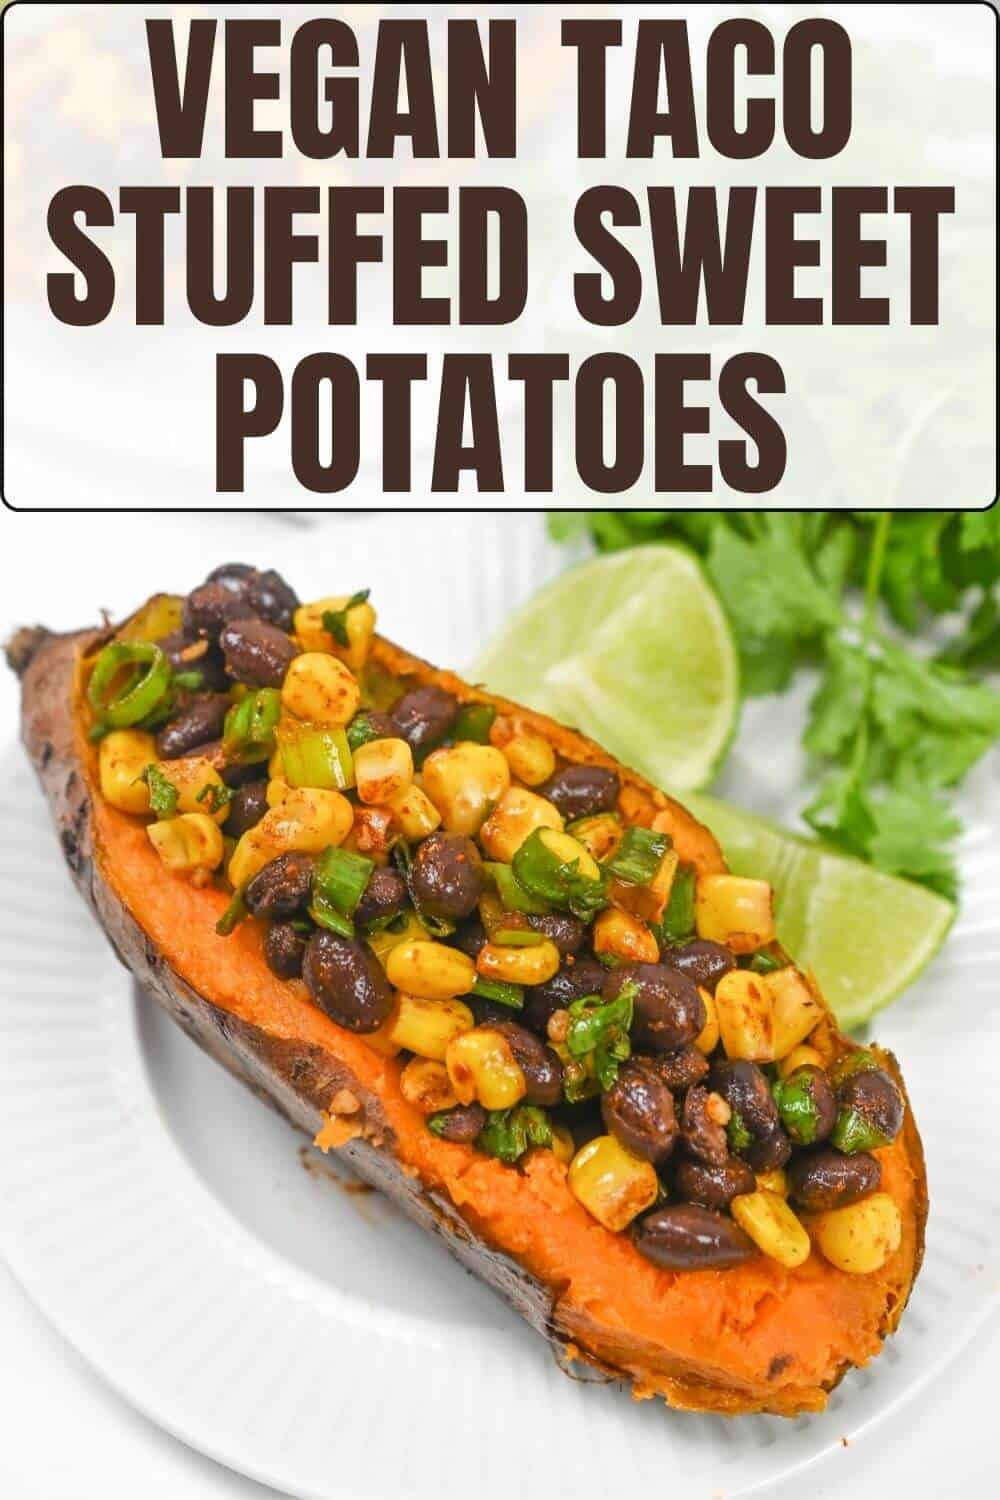 Vegan taco stuffed sweet potatoes.